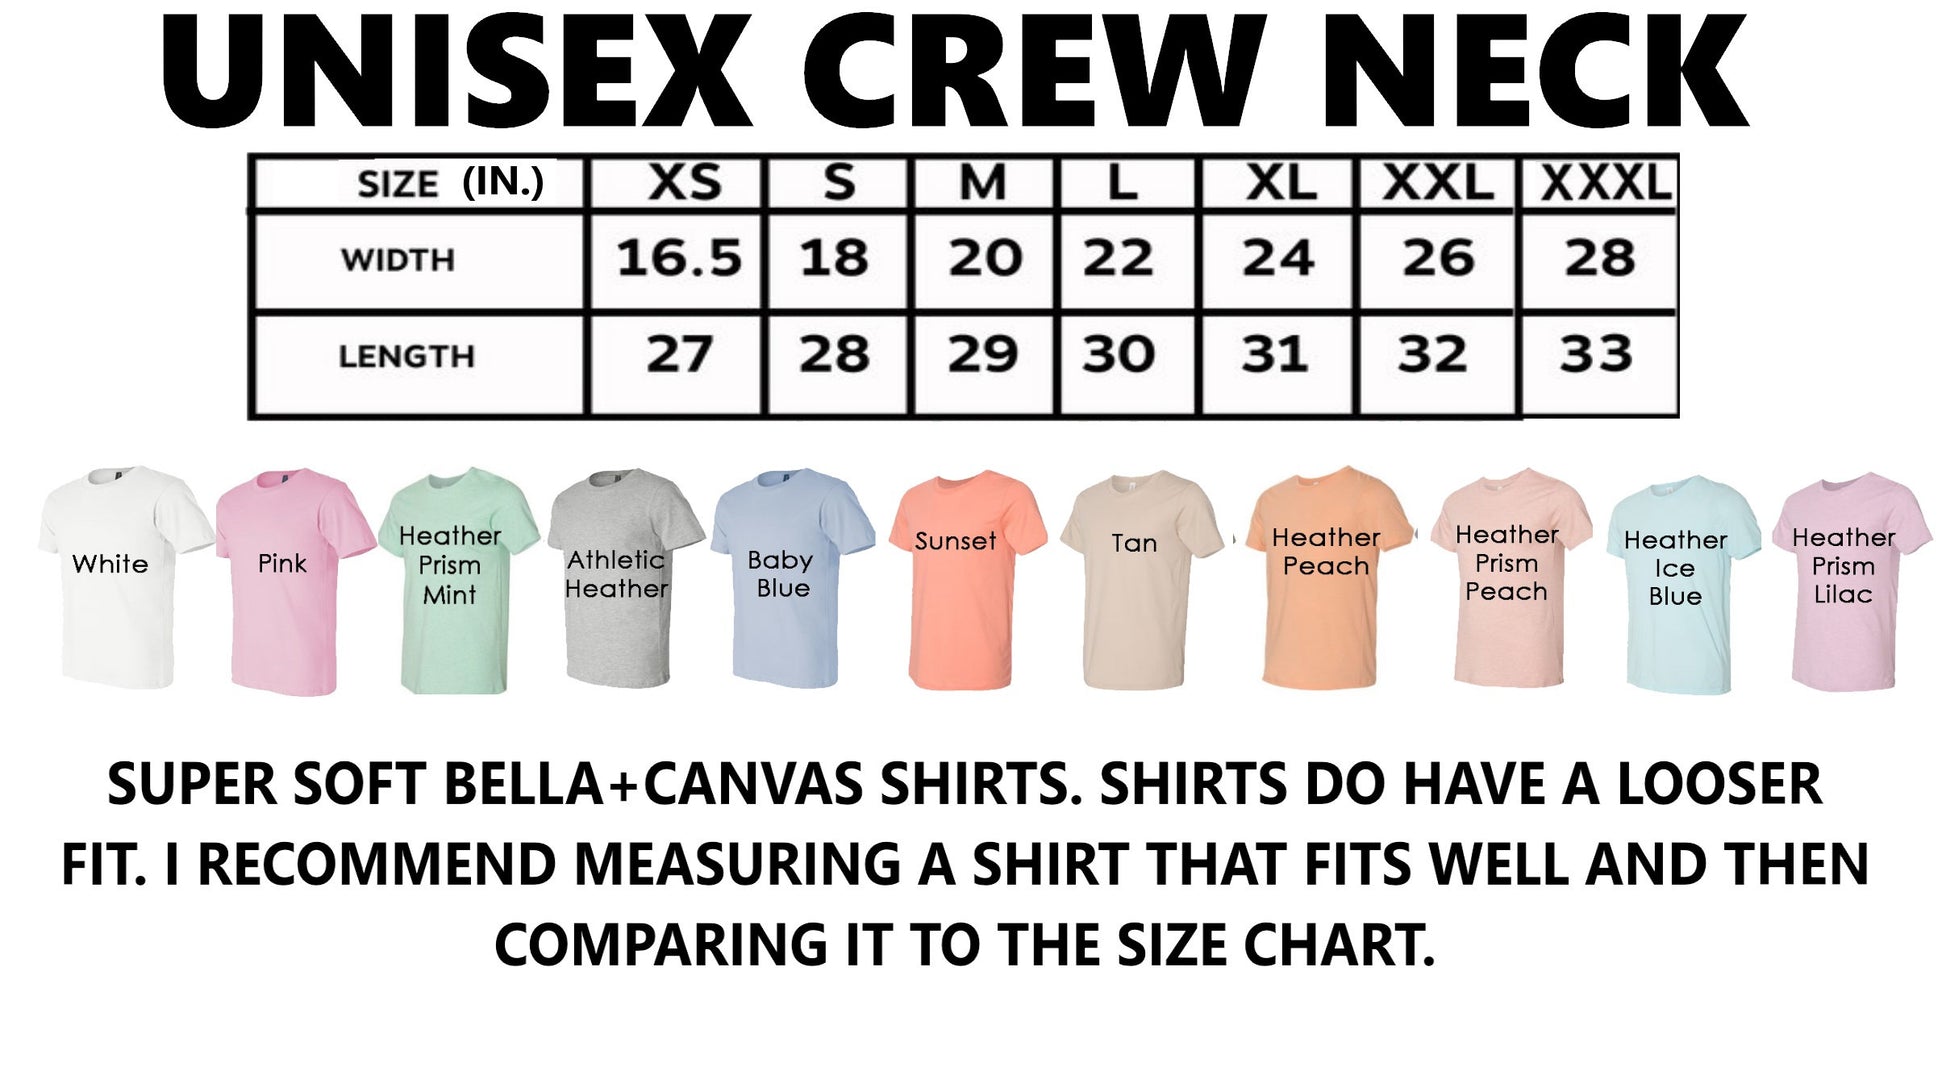 Make Heaven Crowded, Christian Shirt, Bible Shirt, Jesus Love, Leopard Print Unisex T-Shirt